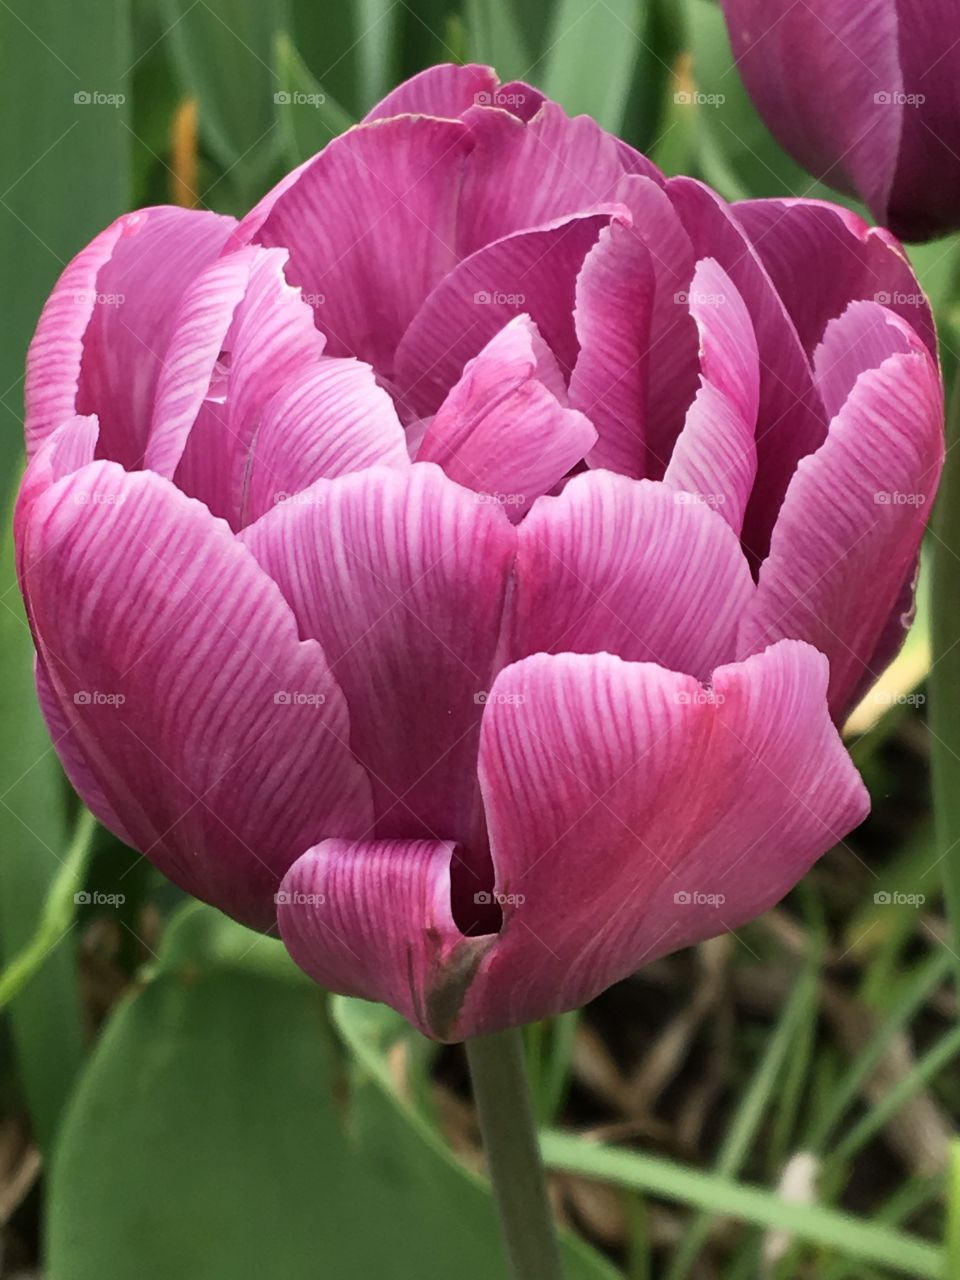 Fancy pink tulip - closeup 